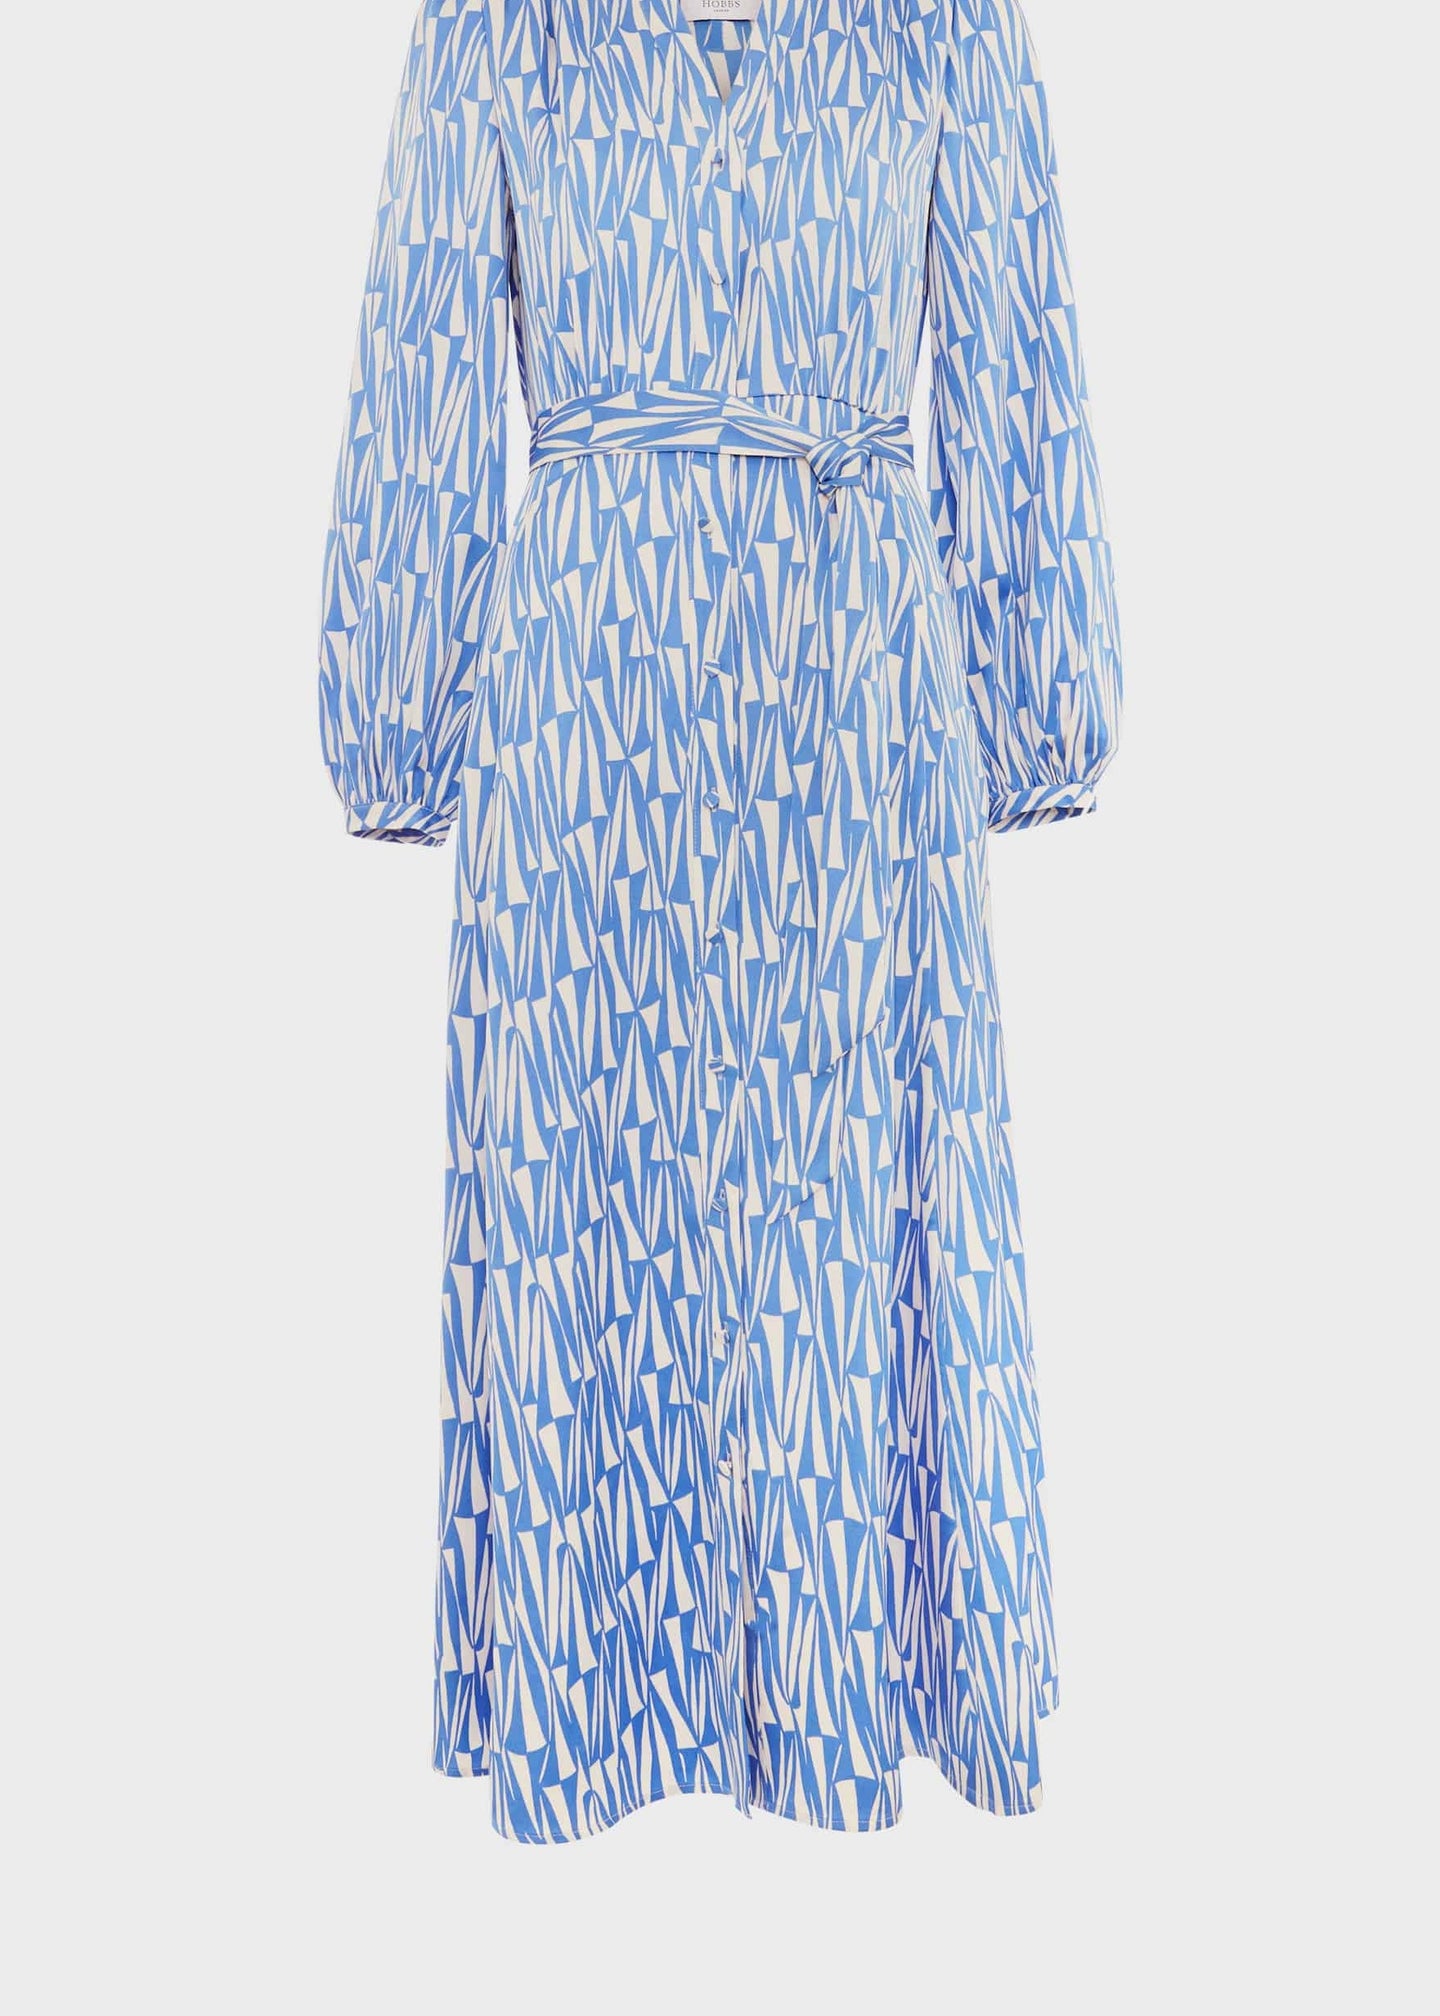 Deanery Dress 0124/5346/9045l00 Blue-Ivory